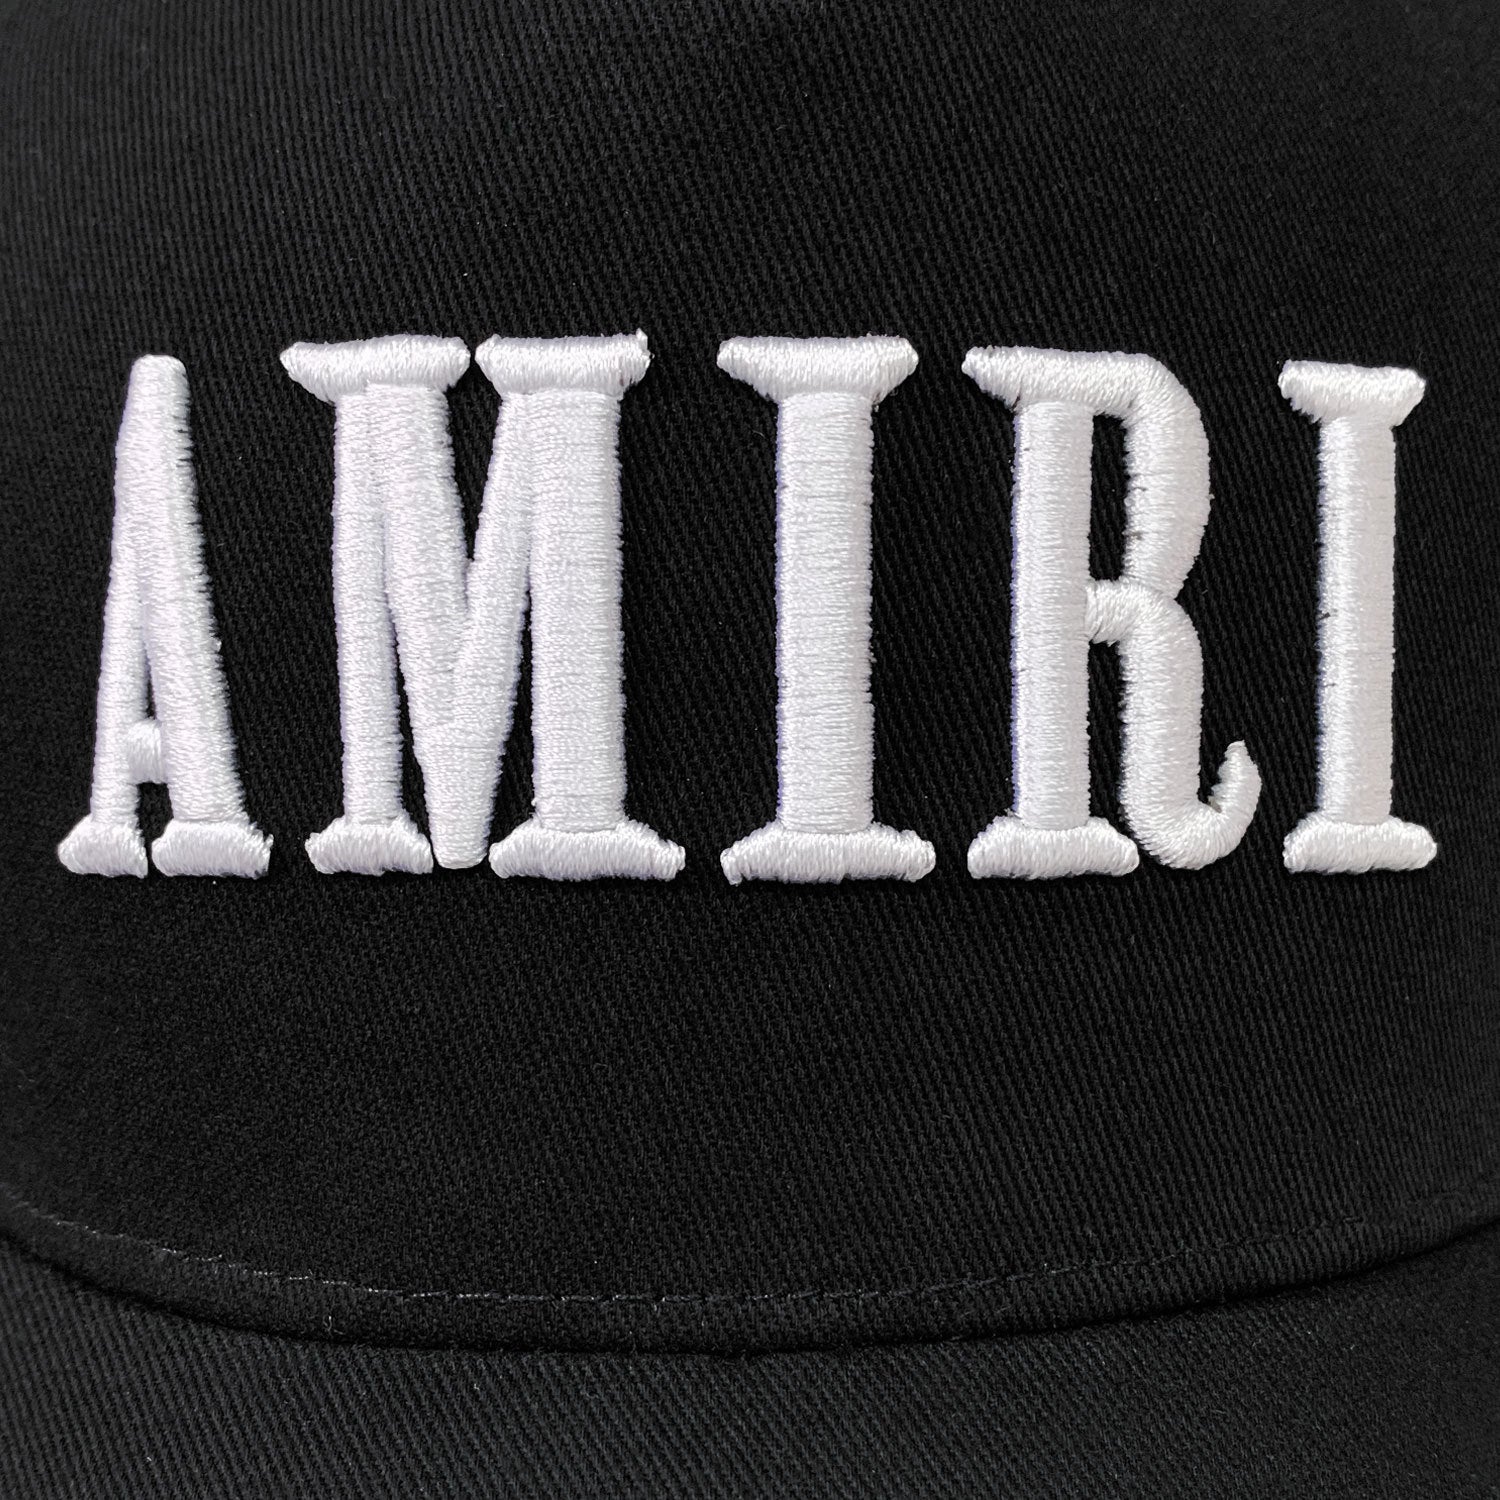 AMIRI Core logo-embroidered baseball caps